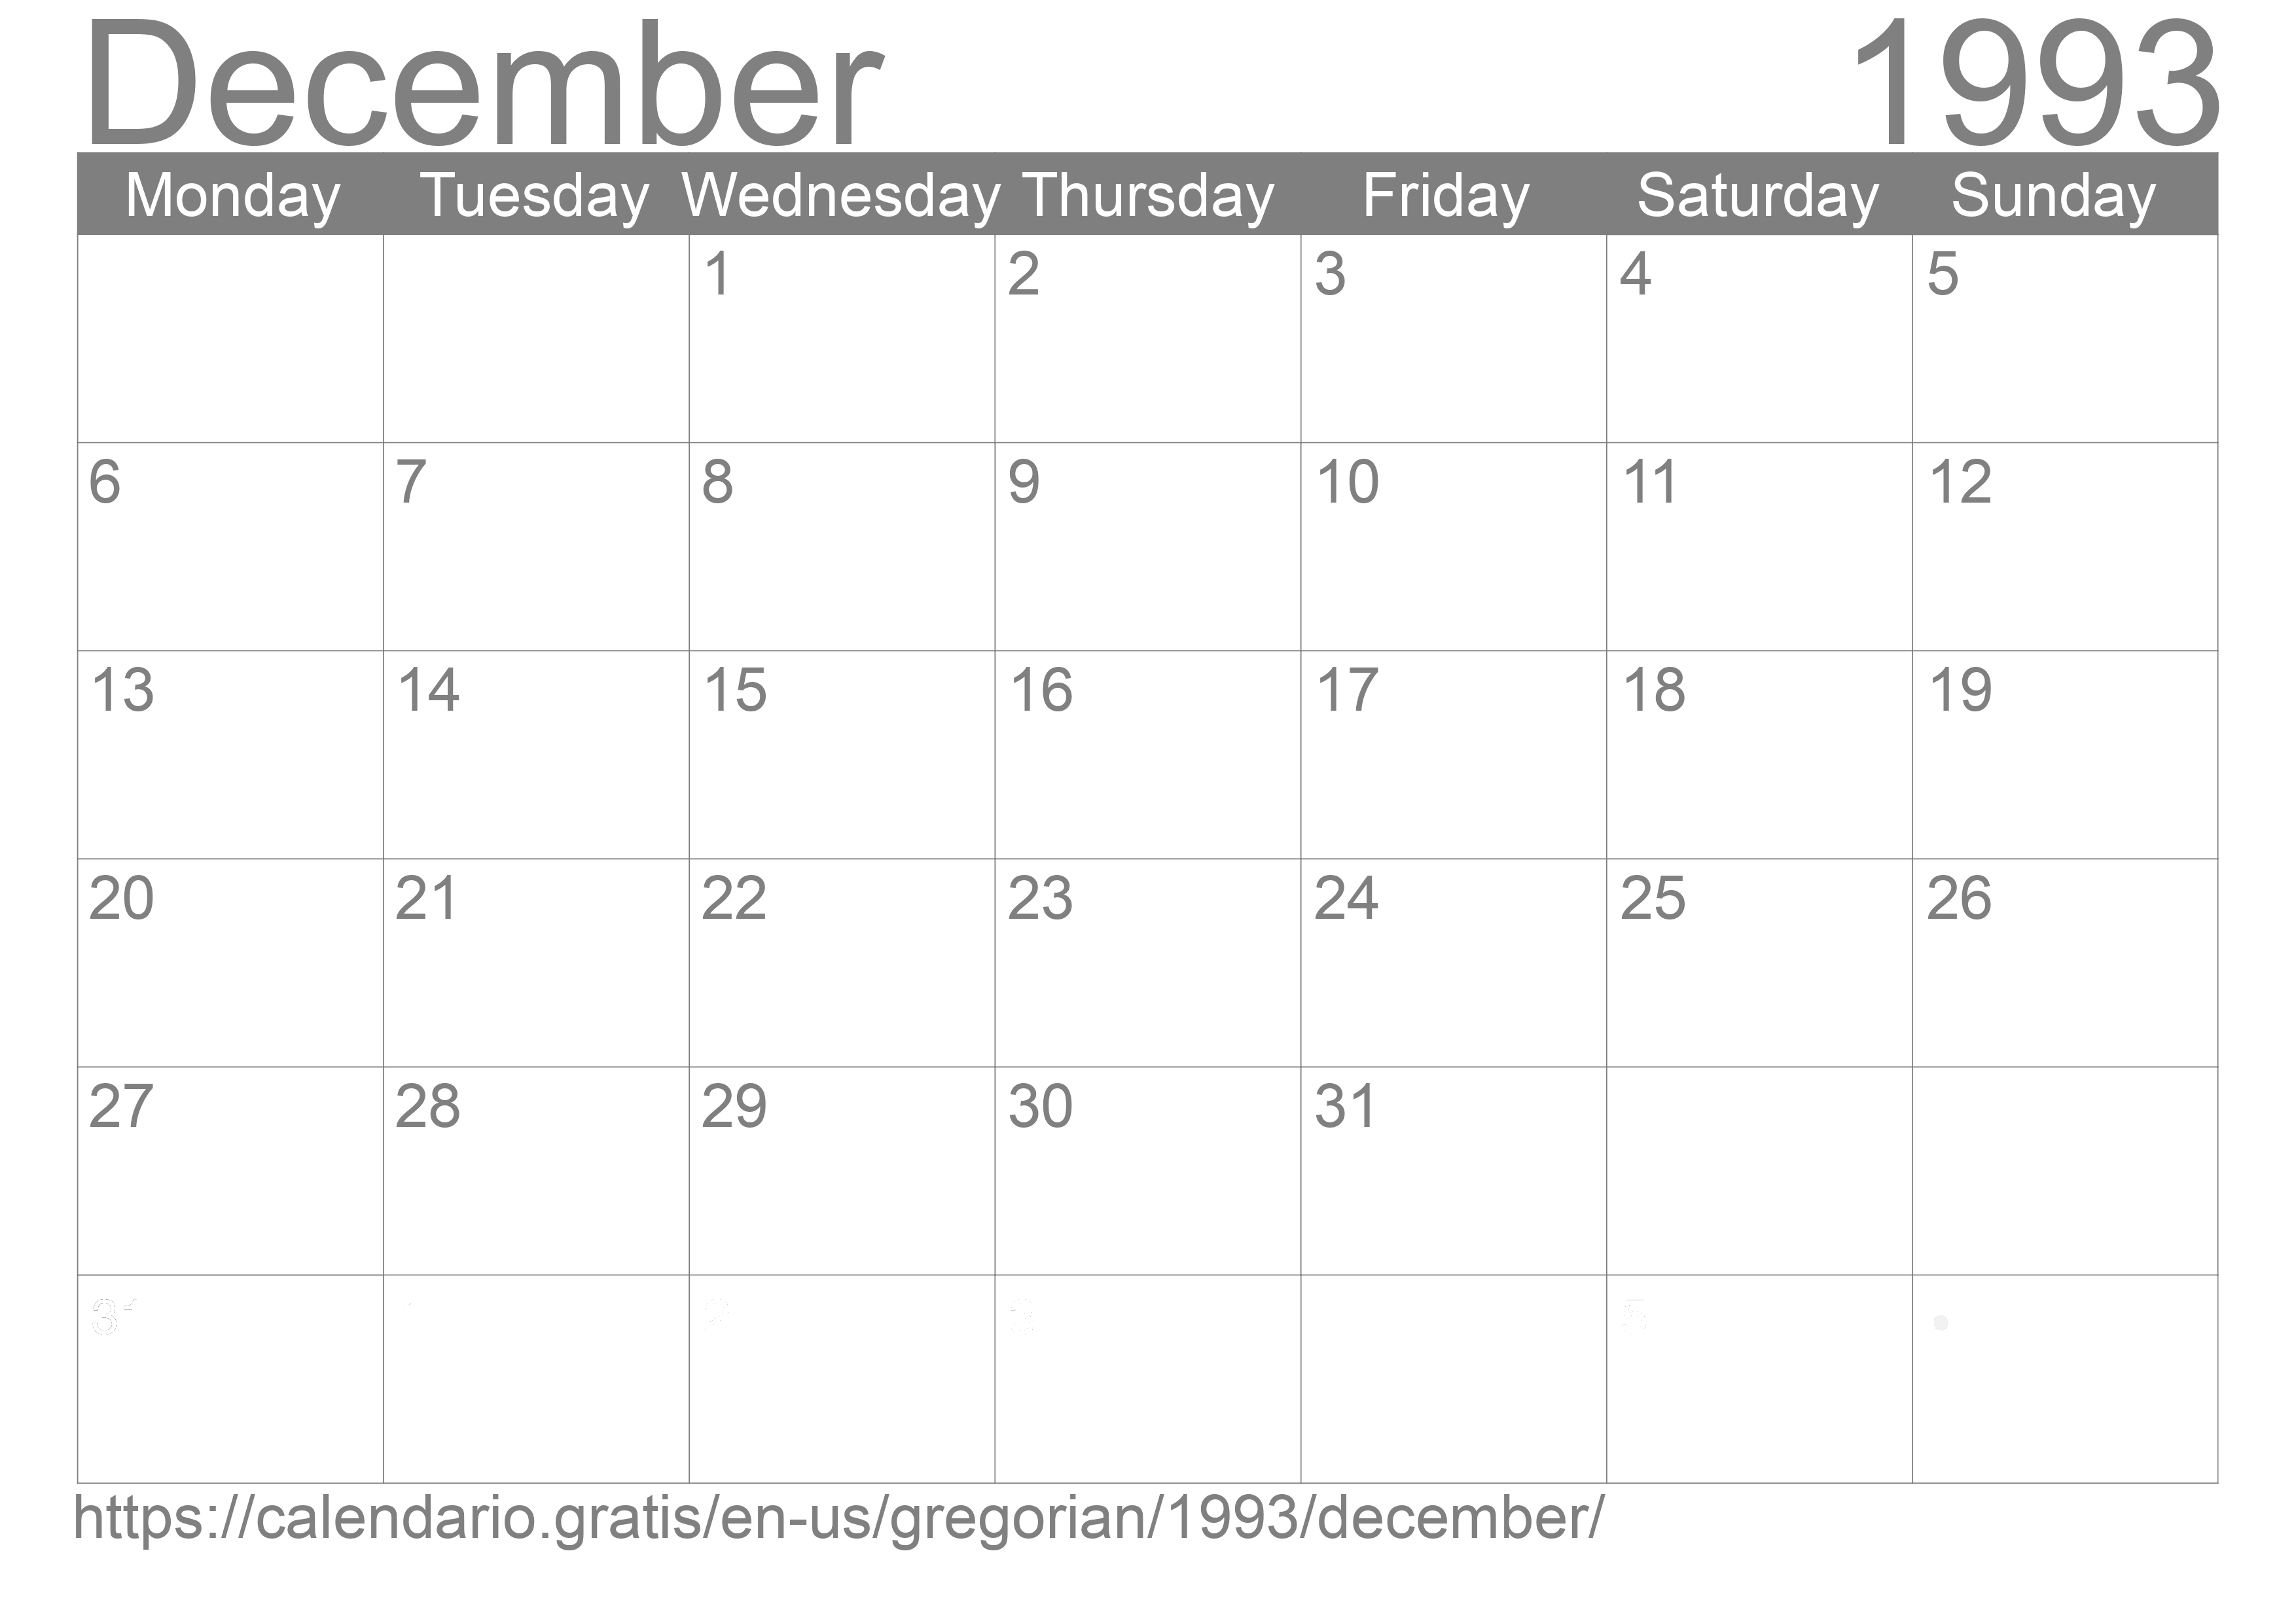 Calendar December 1993 to print